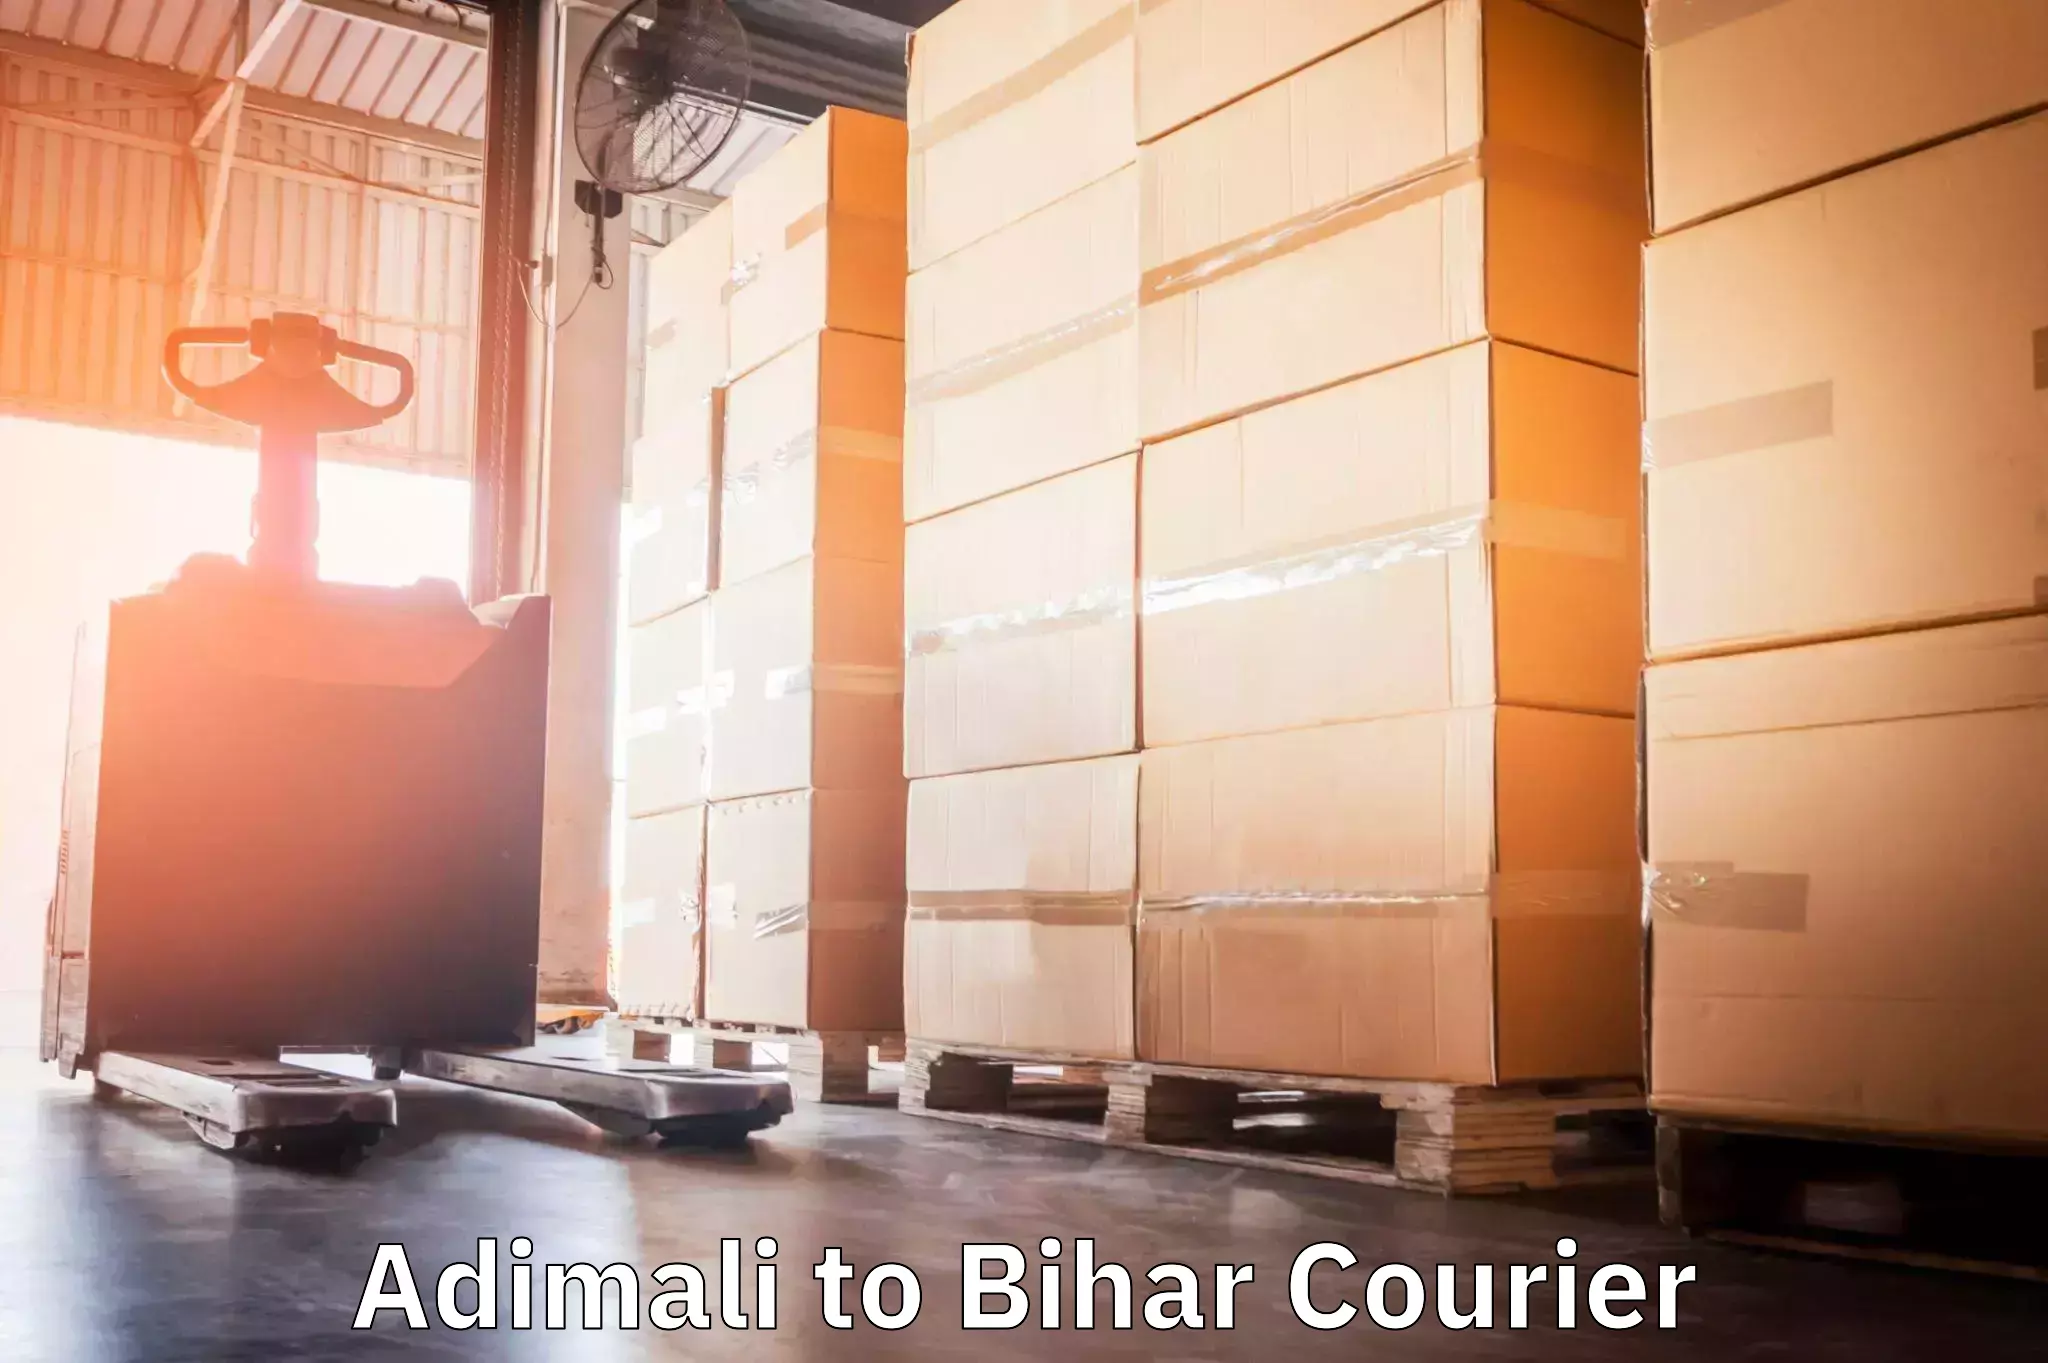 Global shipping networks Adimali to Biraul